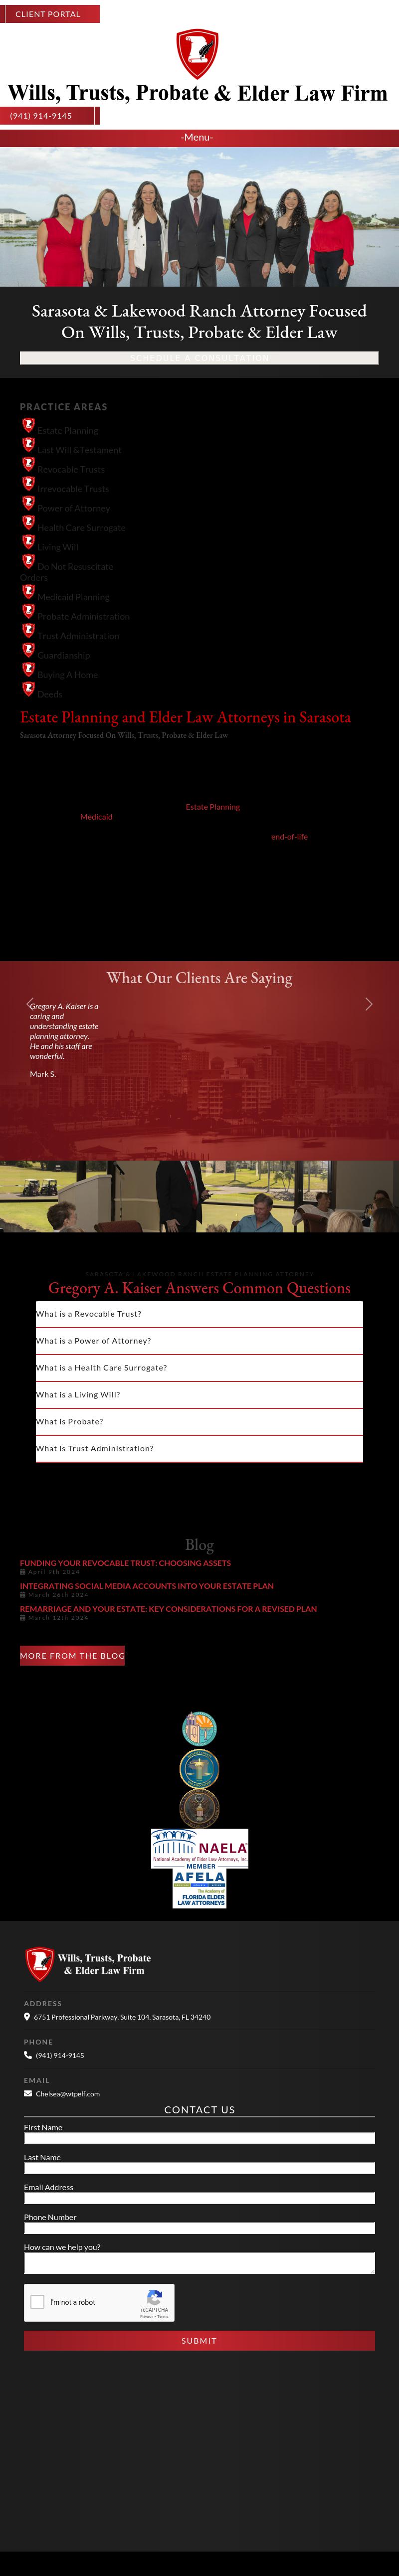 Gregory A. Kaiser - Sarasota FL Lawyers